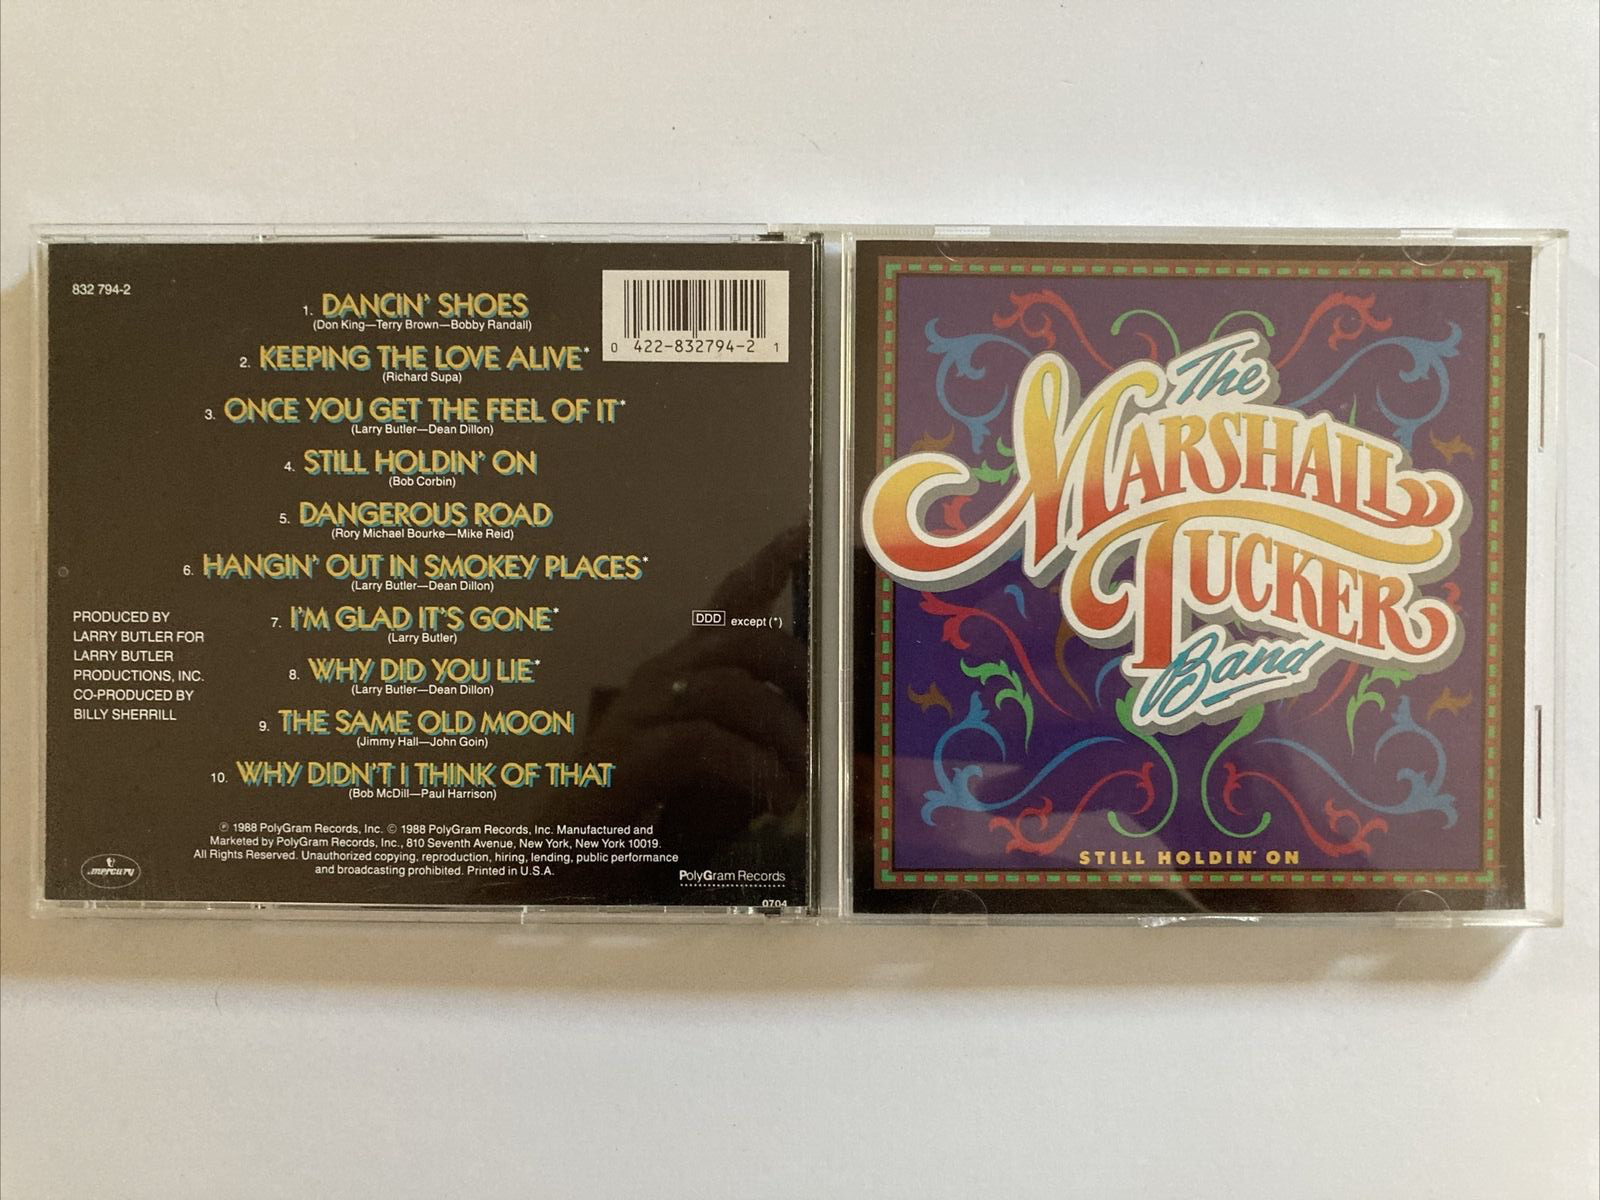 Still Holdin' On by The Marshall Tucker Band (CD, 1988, Mercury) Very Good Cond.